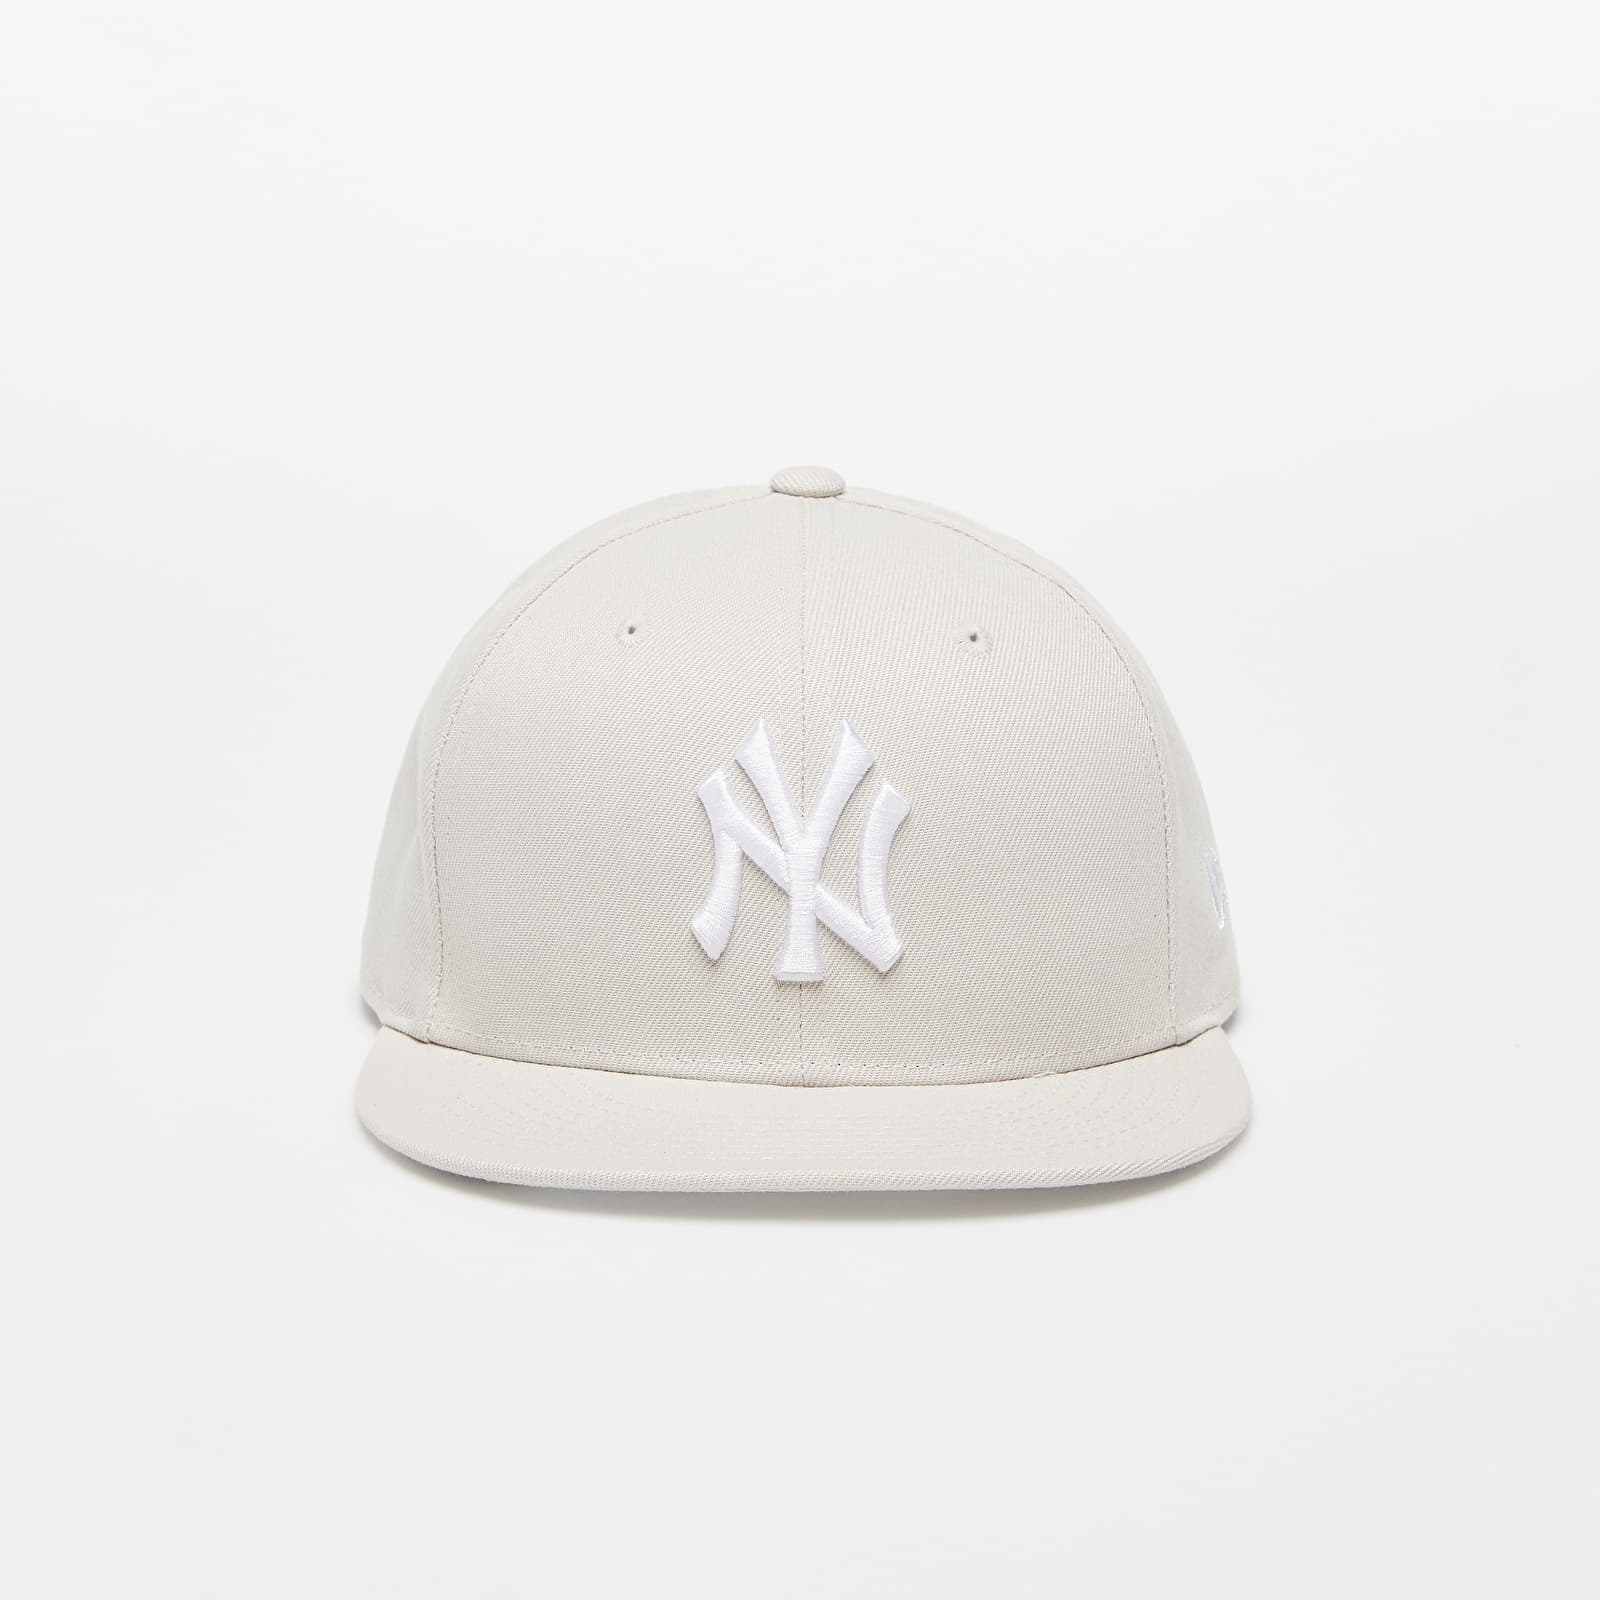 Caps New Era New York Yankees 9FIFTY Snapback Cap Cream